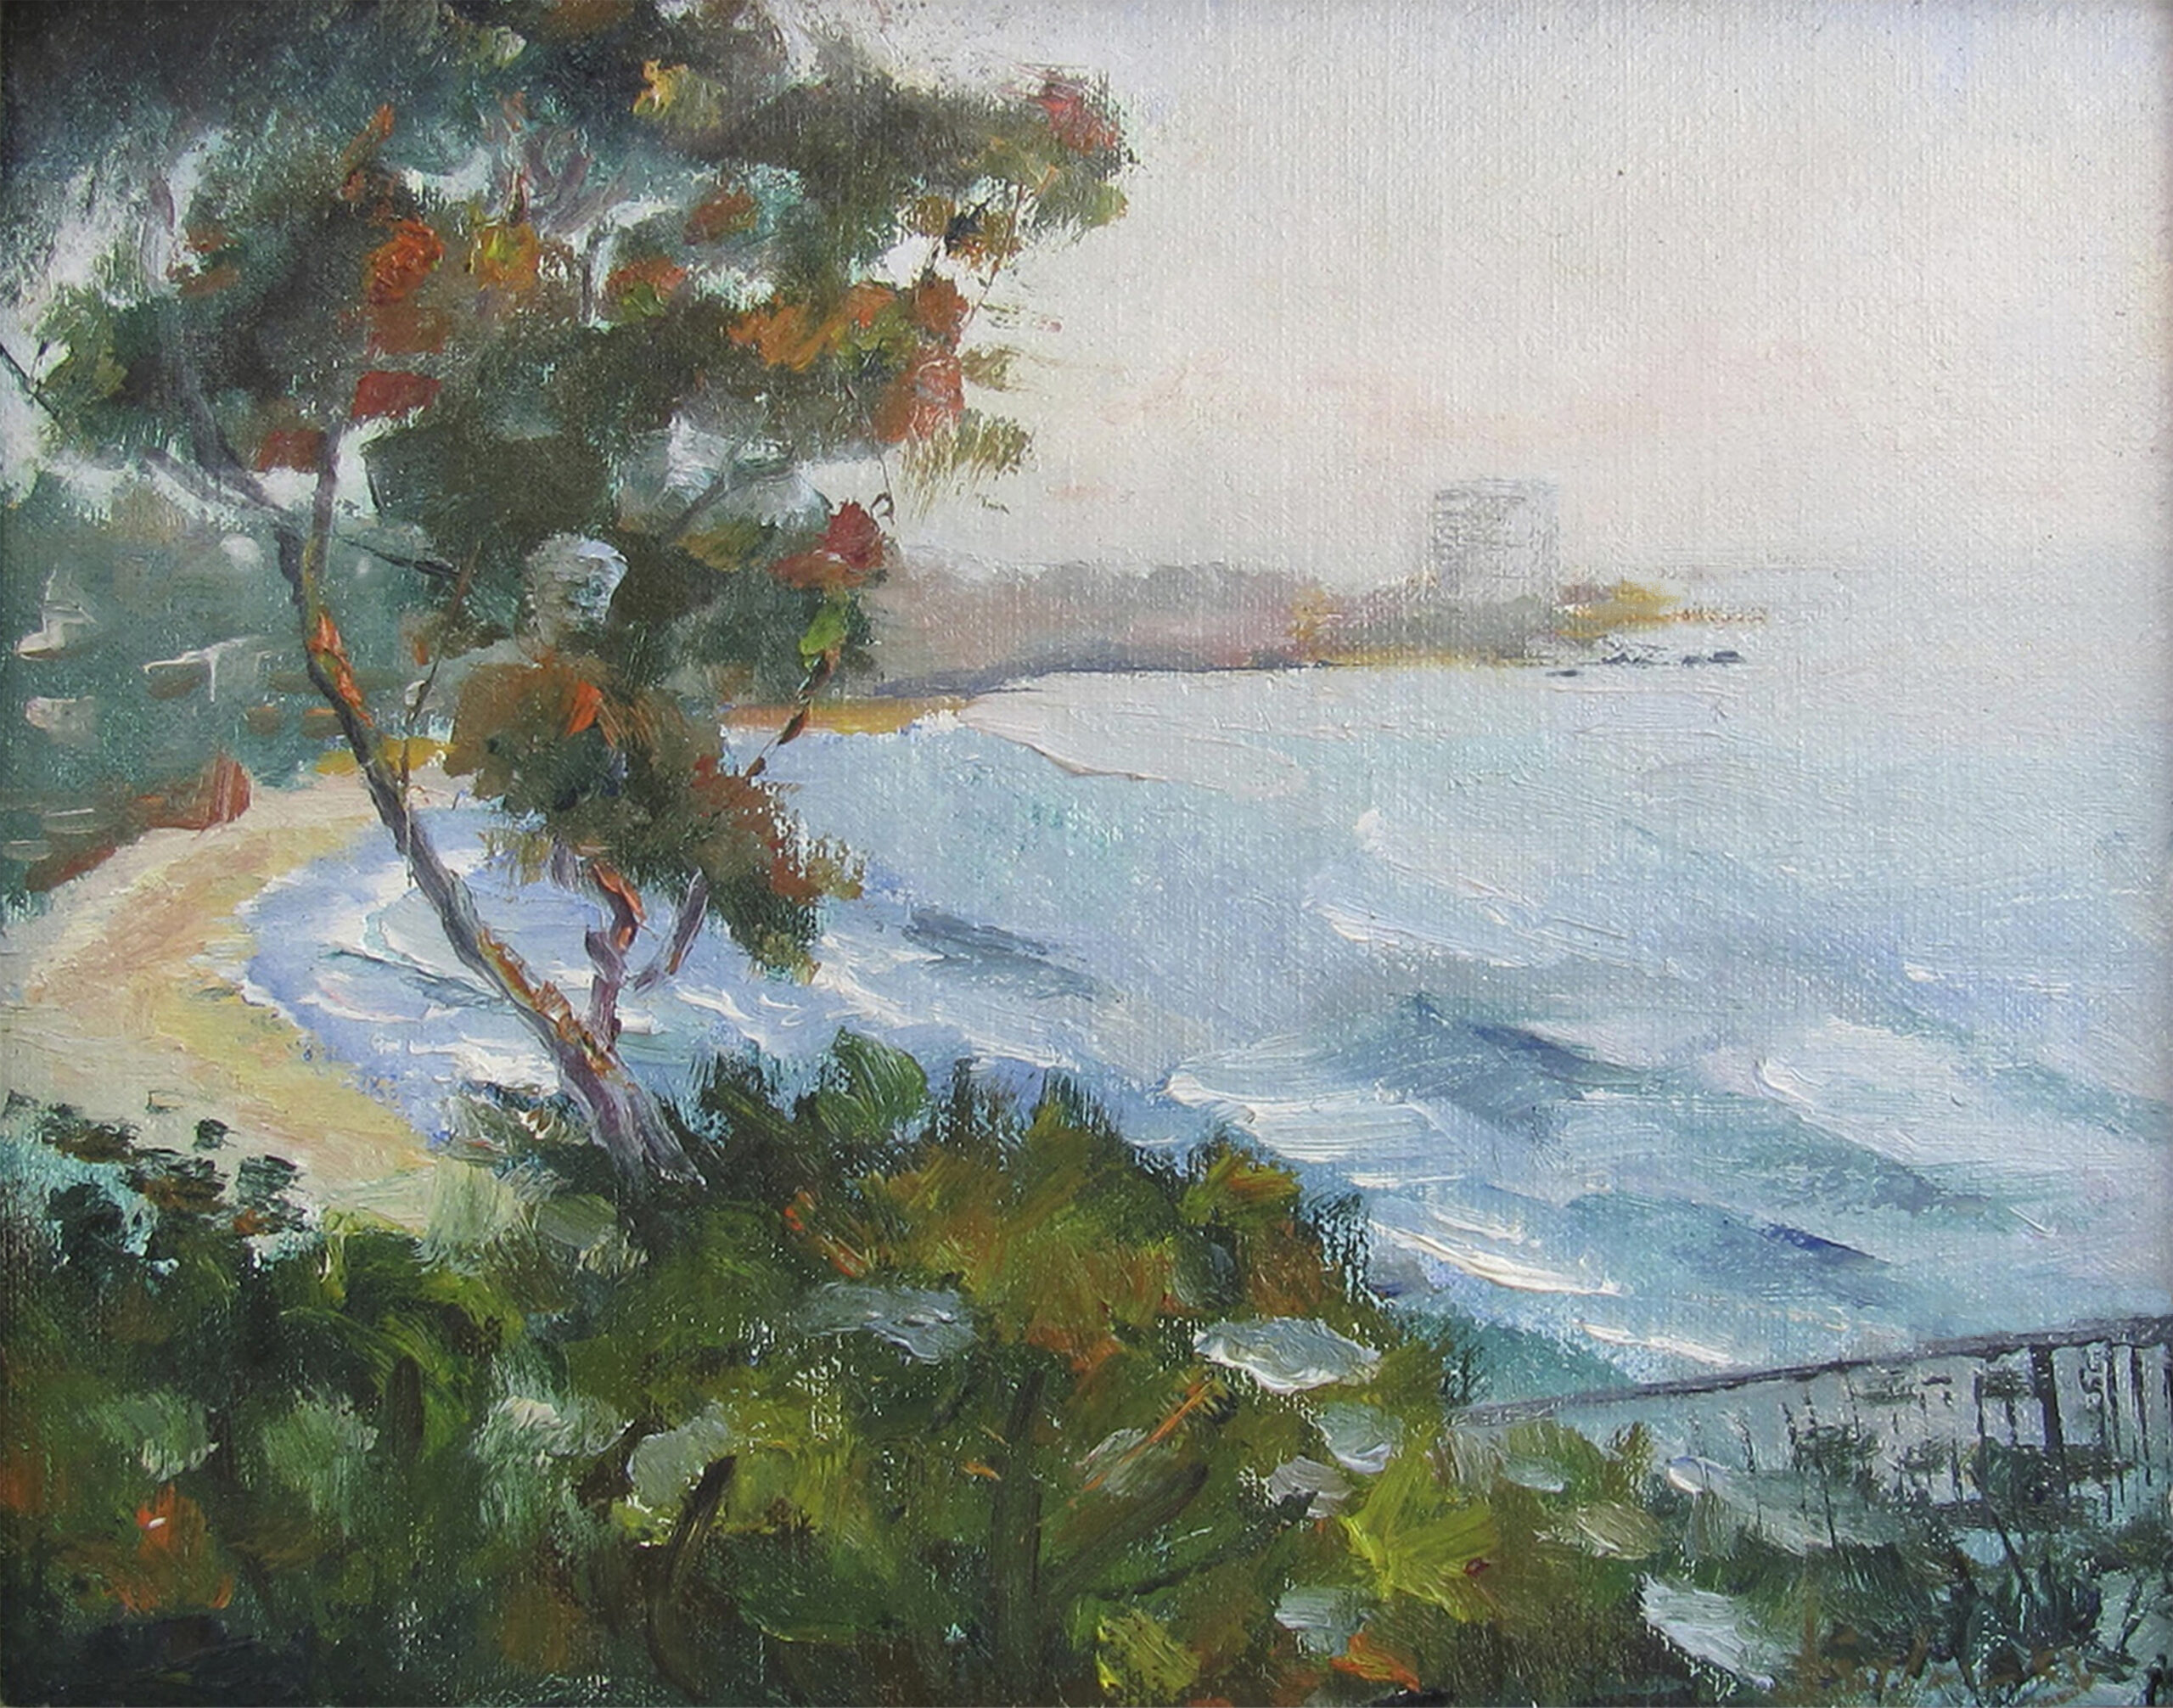 La Jolla Shores, a plein-air painting by Judy Salinsky